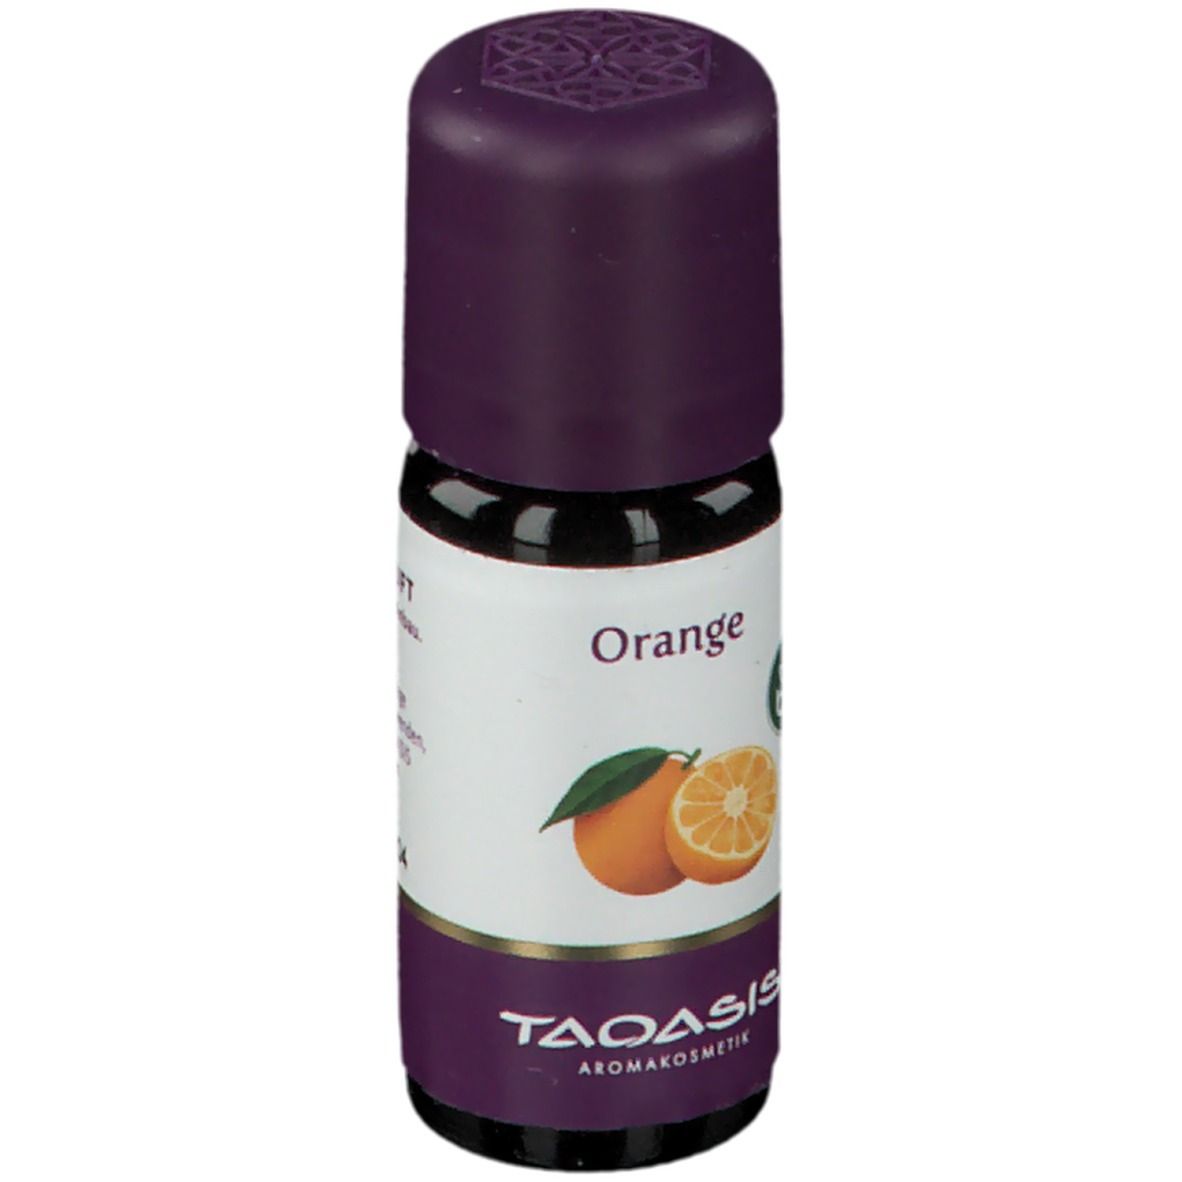 TAOASIS® Orangen Öl BIO